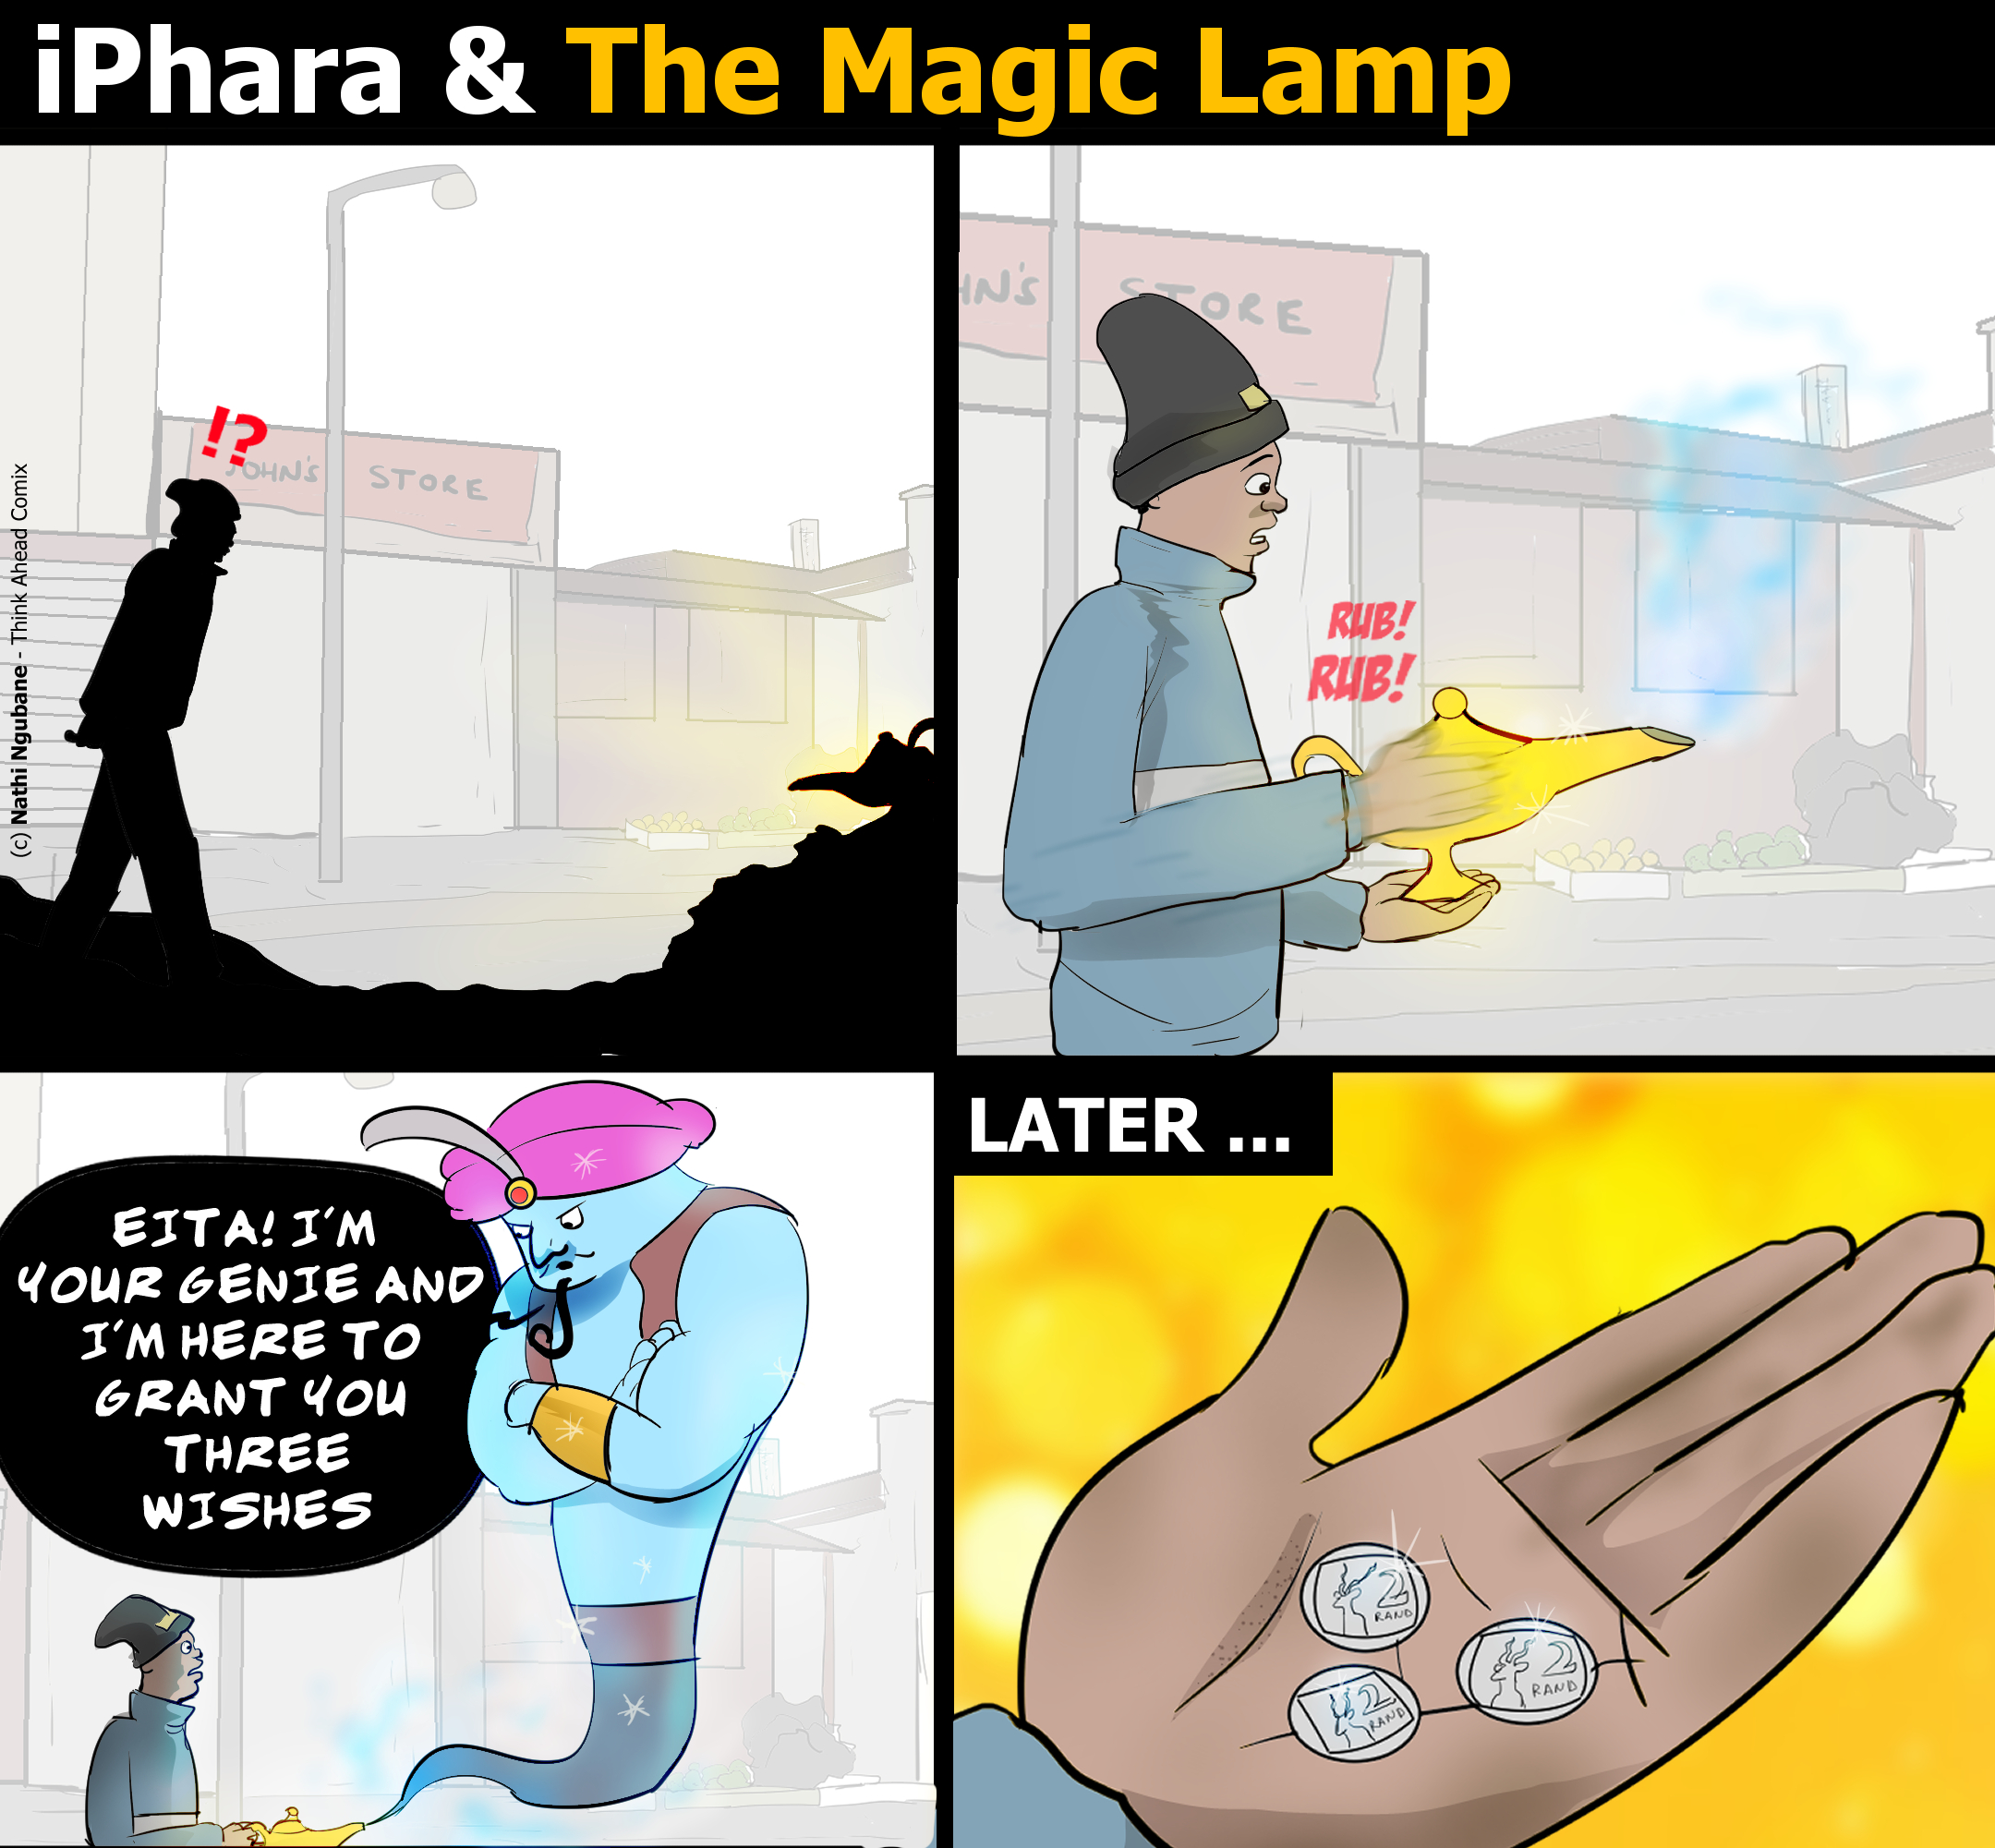 The Magic Lamp